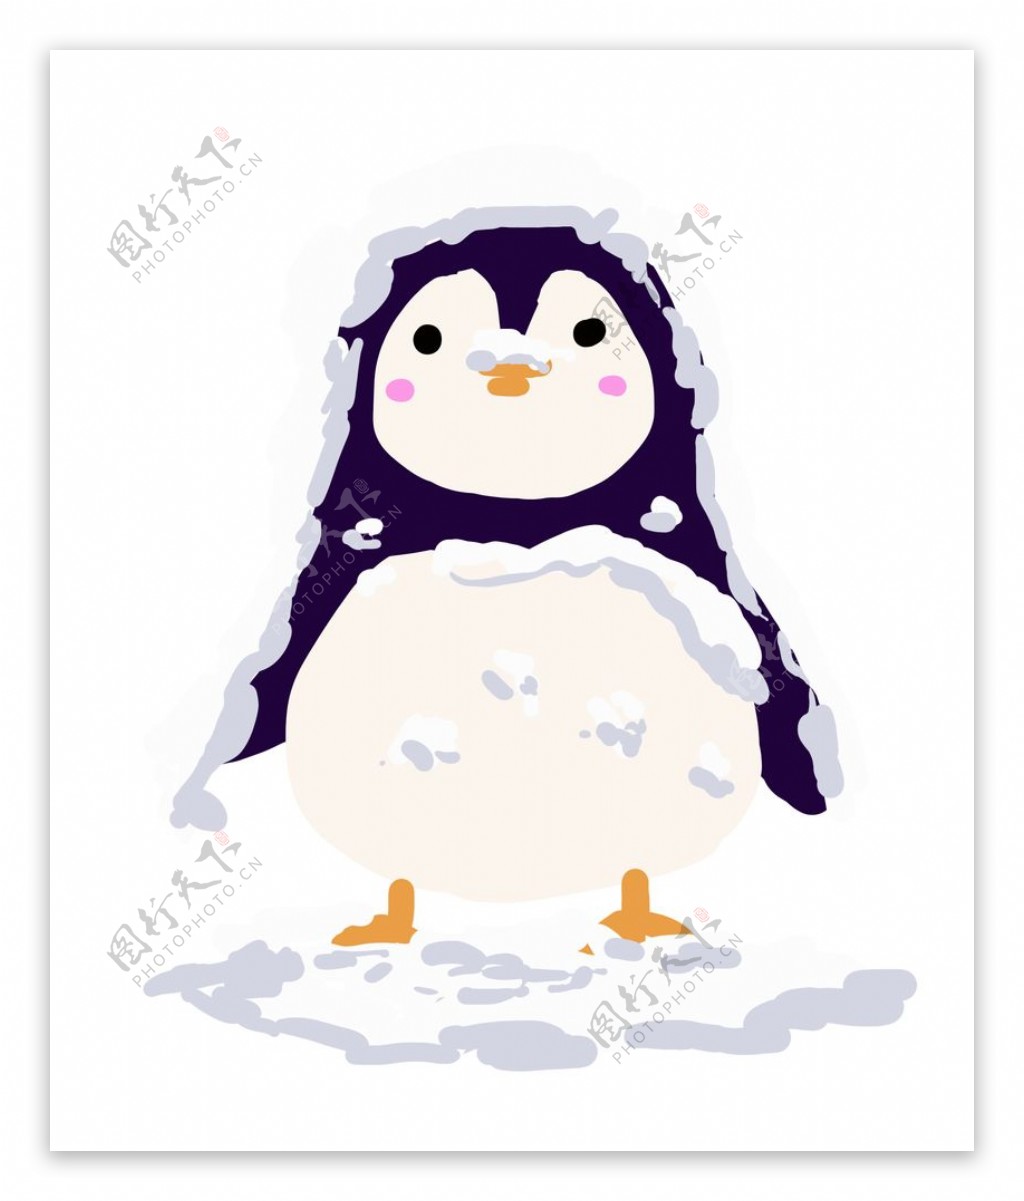 QQ企鹅图片素材-编号08591957-图行天下